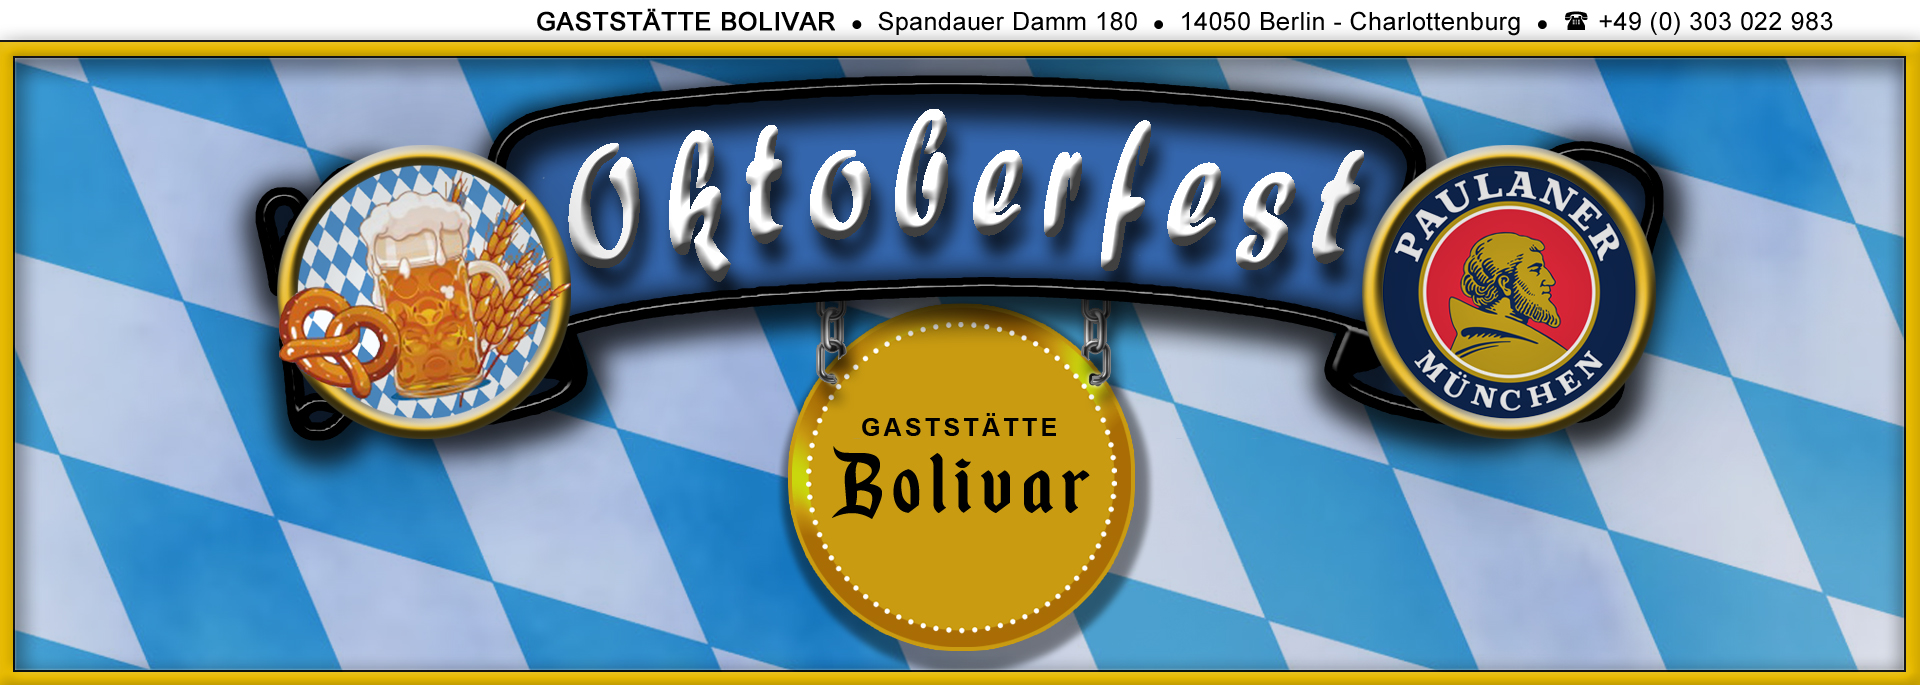 bolivar-berlin-charlottenburg-westend-oktoberfest-02